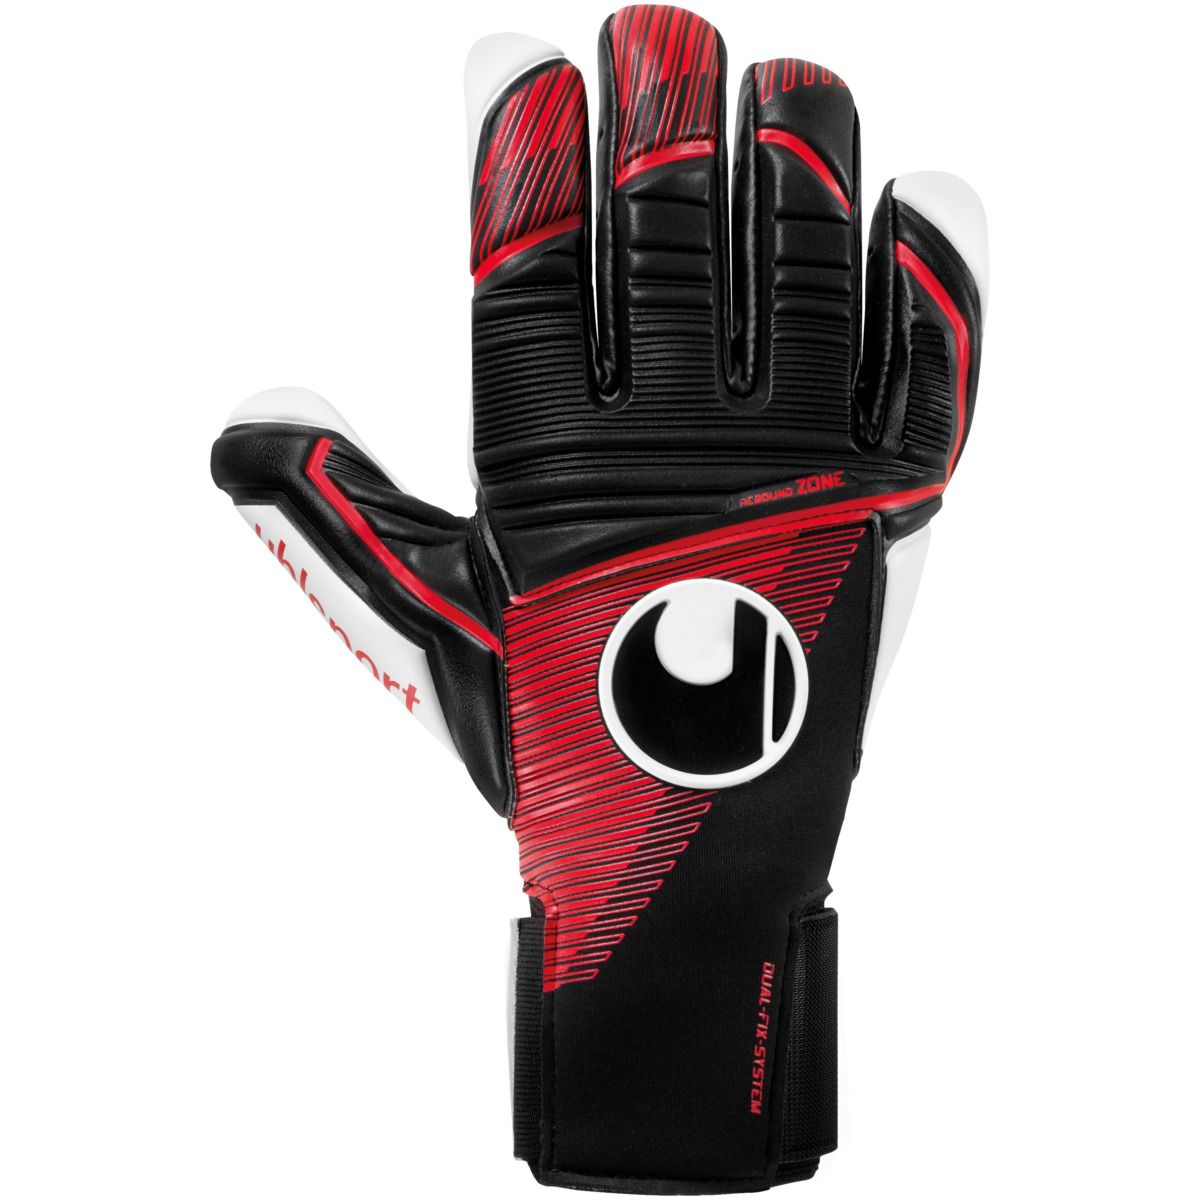 Вратарские перчатки UHLSPORT Powerline Absolutgrip HN black/red/white купить